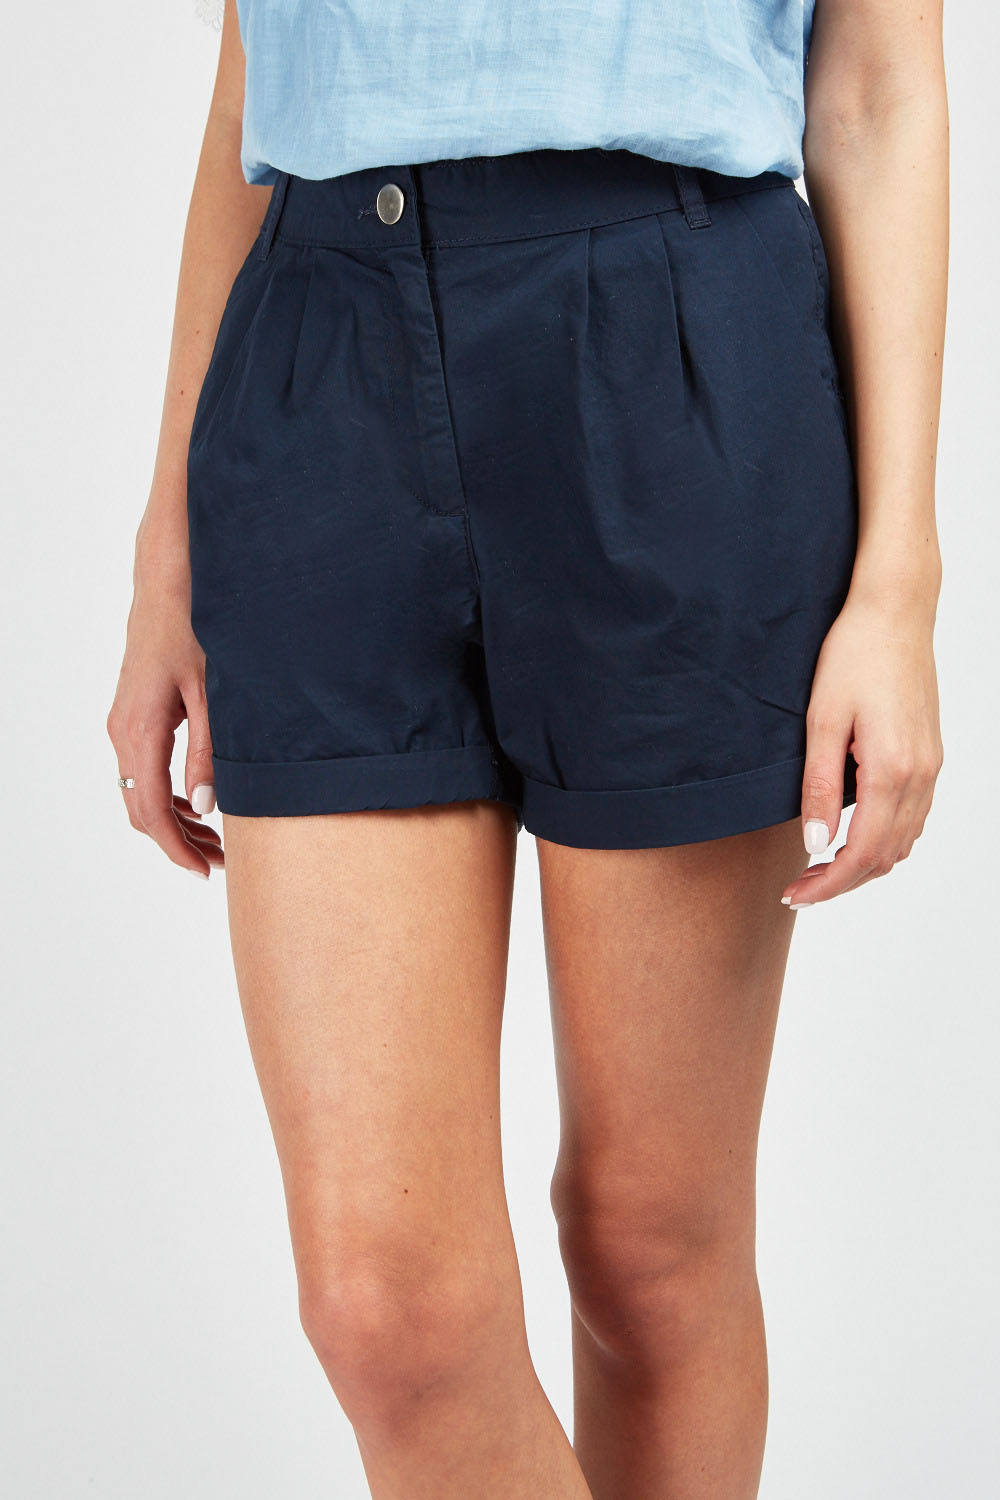 Casual Safari Style Shorts - Just $3